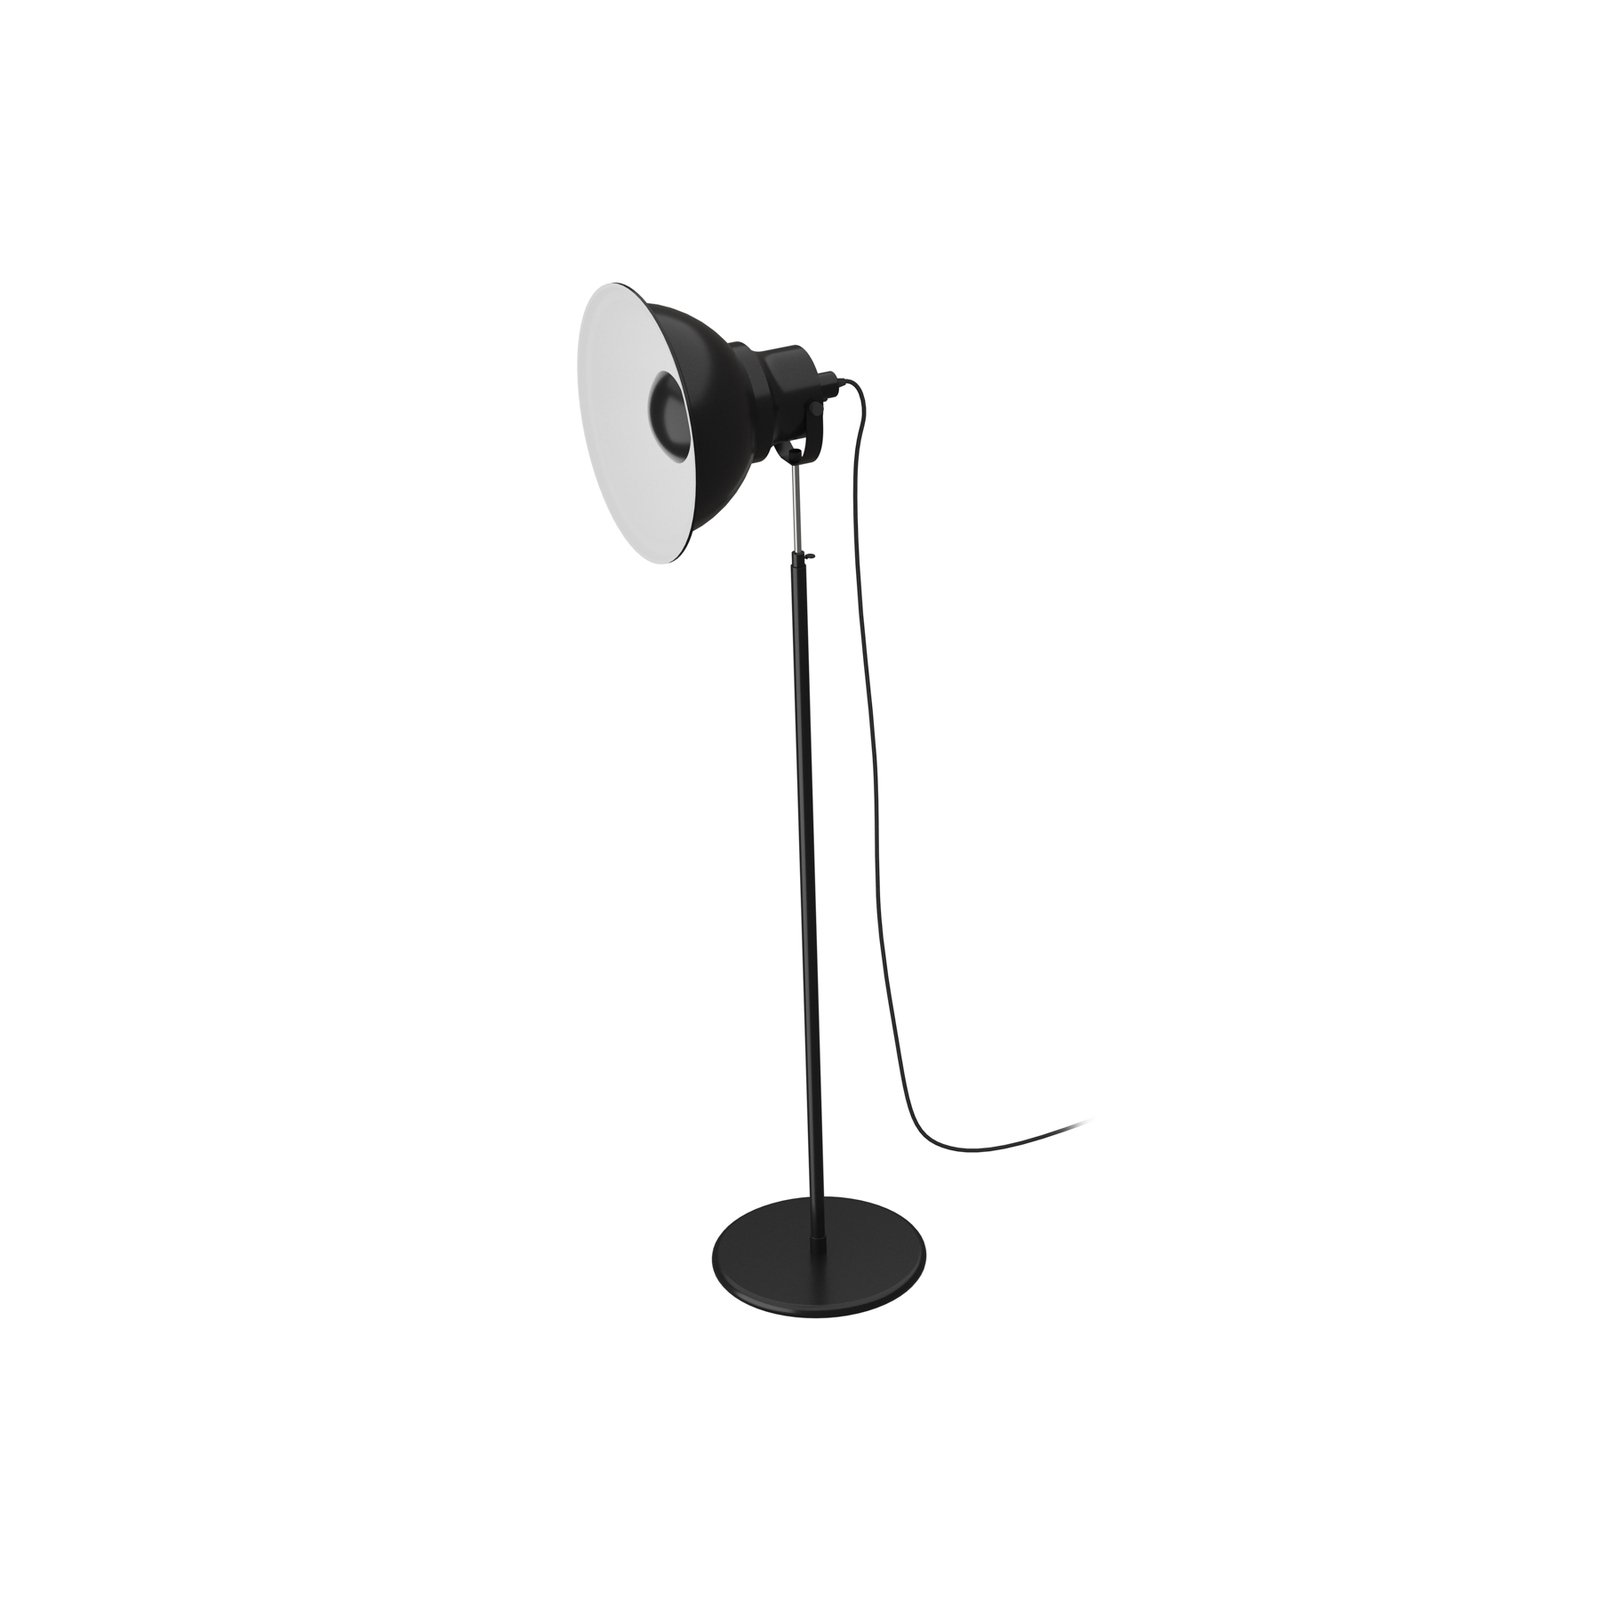 Aluminor Reflex 2 floor lamp, adjustable, black